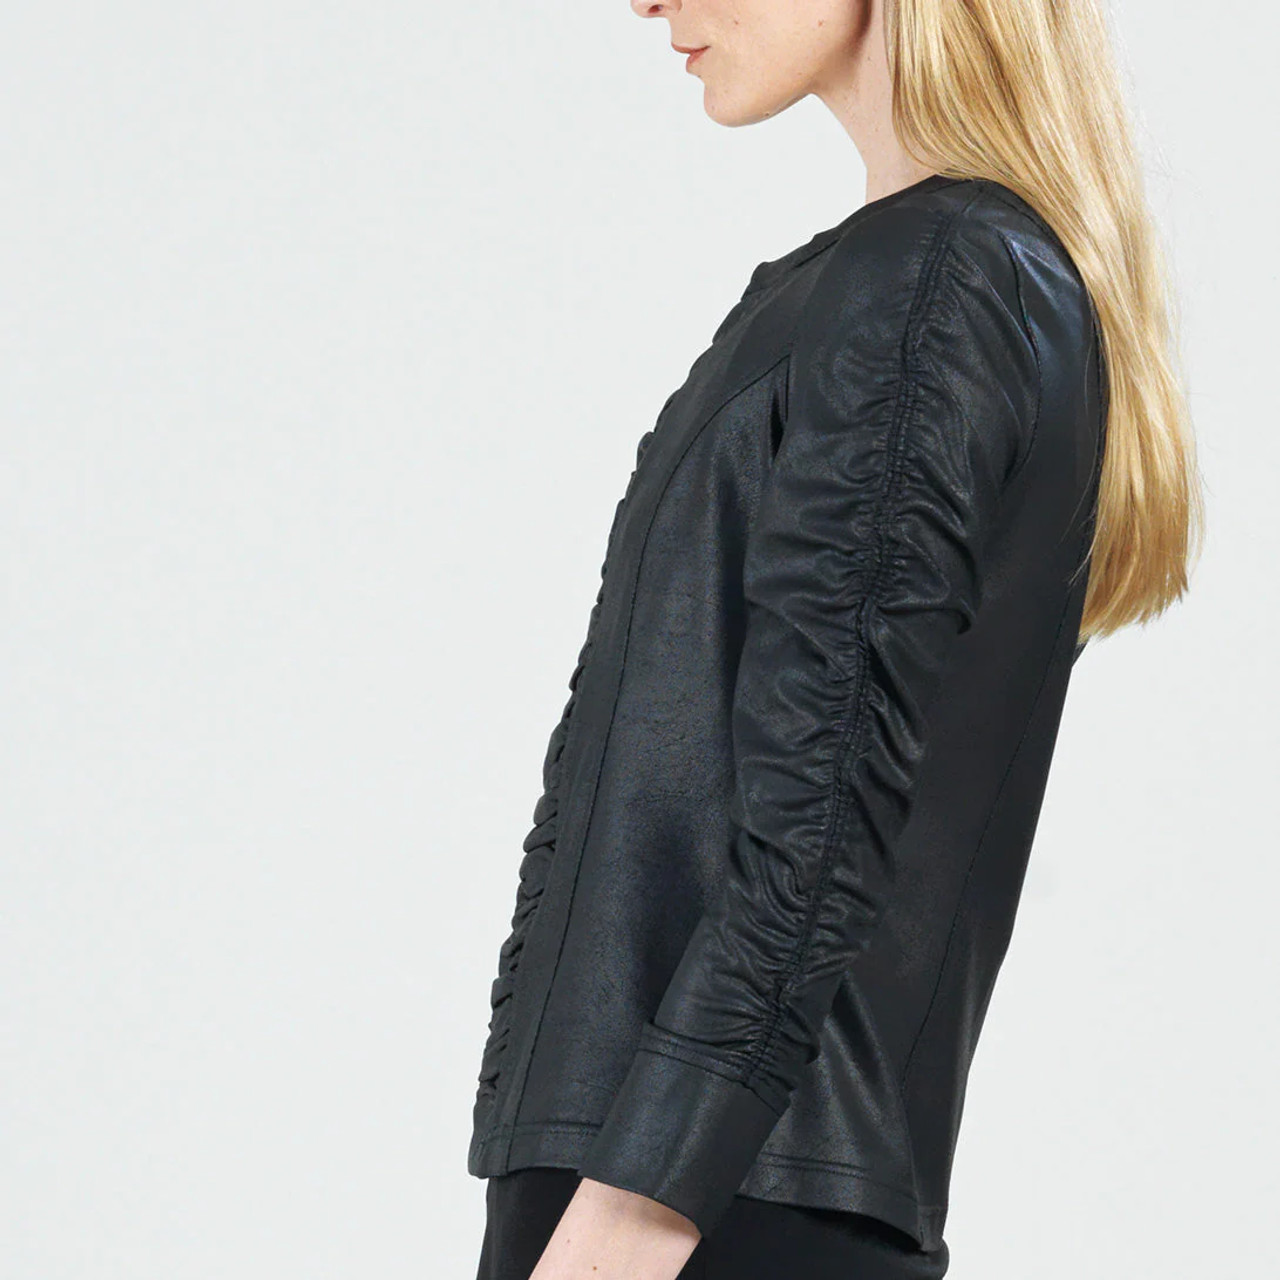 Clara Sunwoo Classic Liquid Leather Jacket With Hem Zip Details